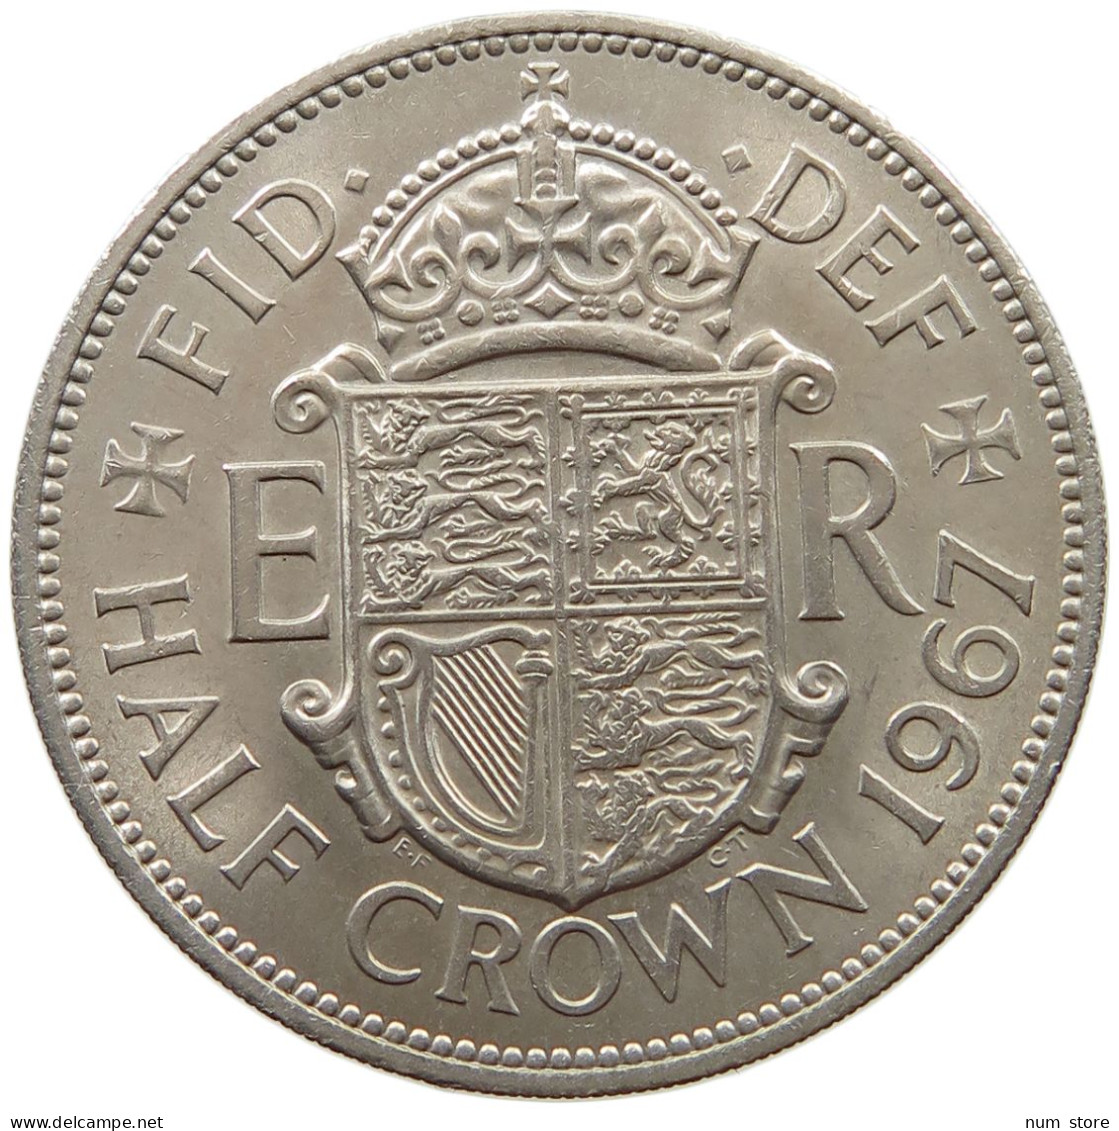 GREAT BRITAIN HALF CROWN 1967 Elisabeth II. (1952-) #a087 0751 - K. 1/2 Crown